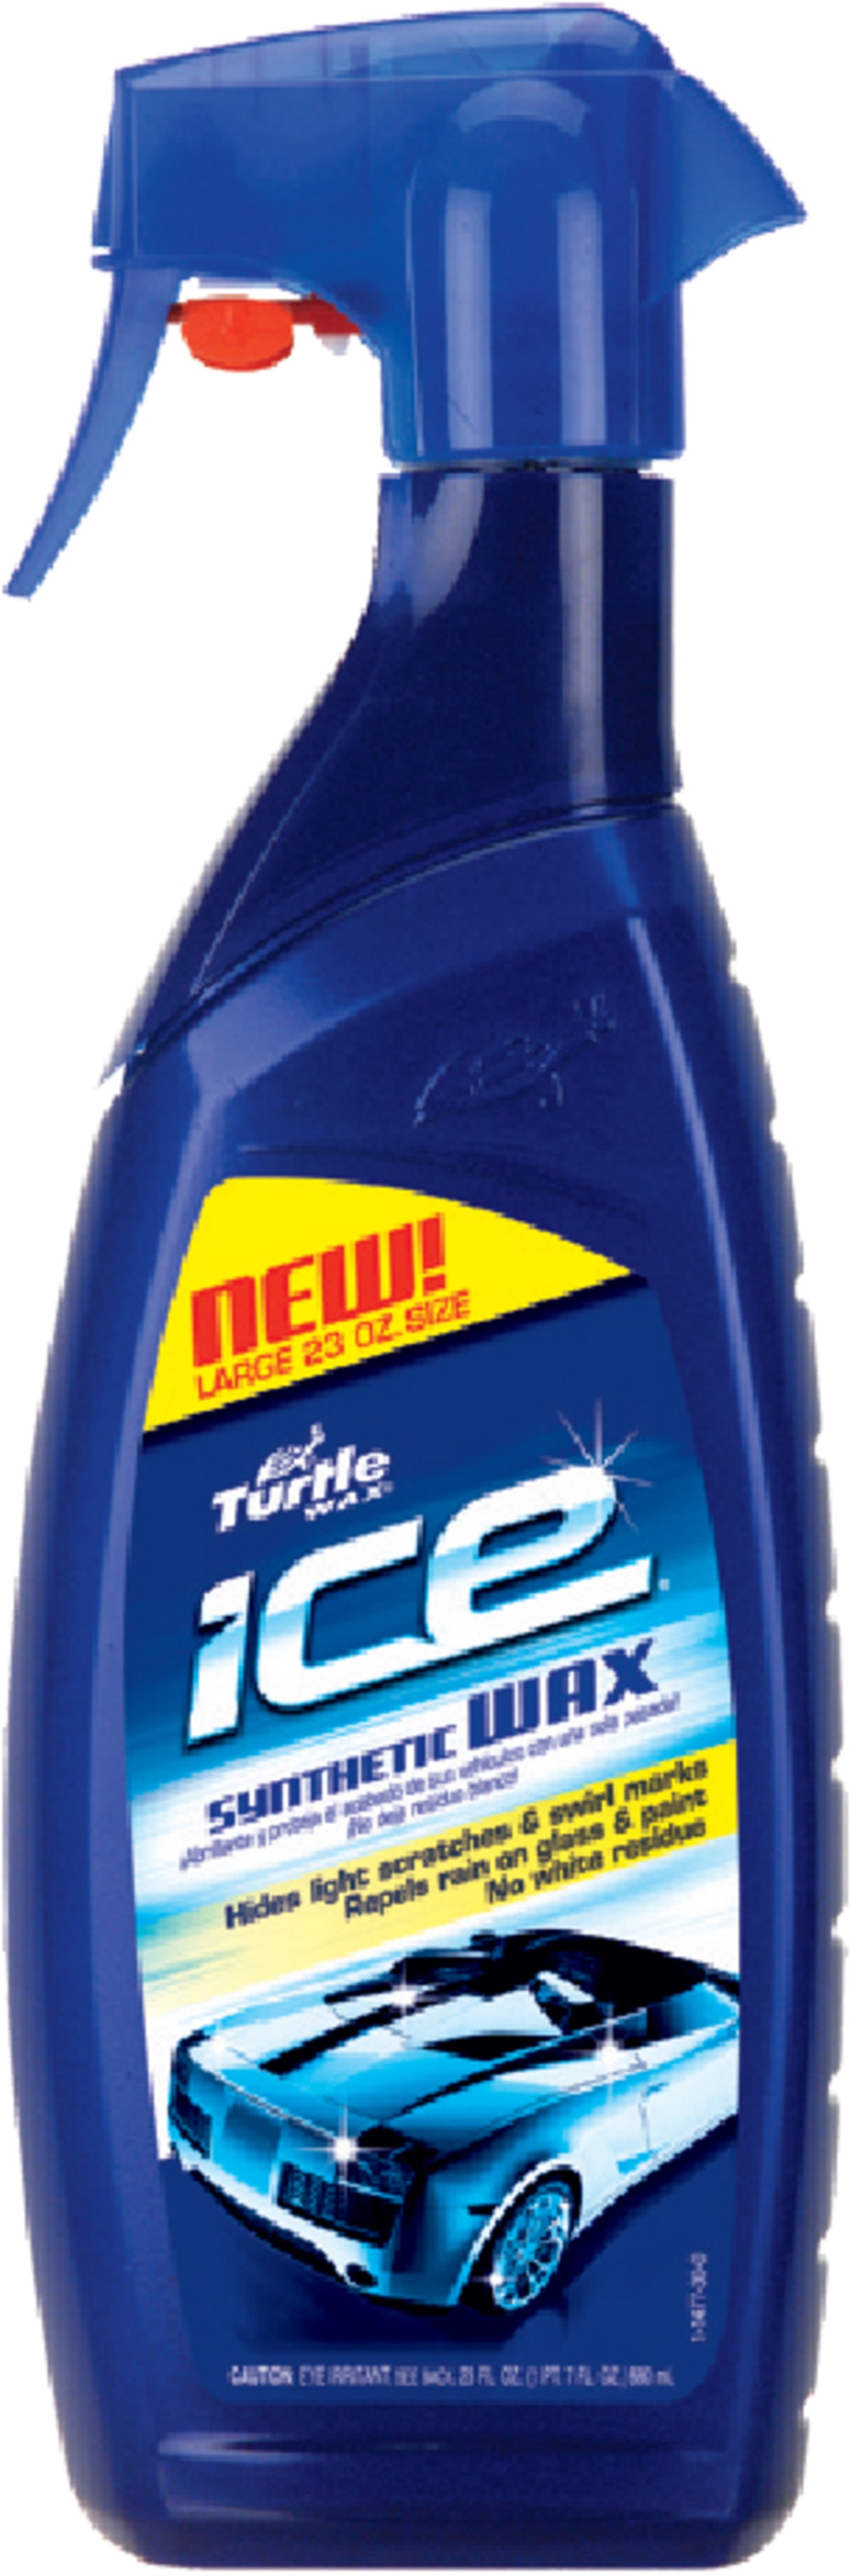 Turtle Wax ICE Spray Wax, 23 oz., 81850